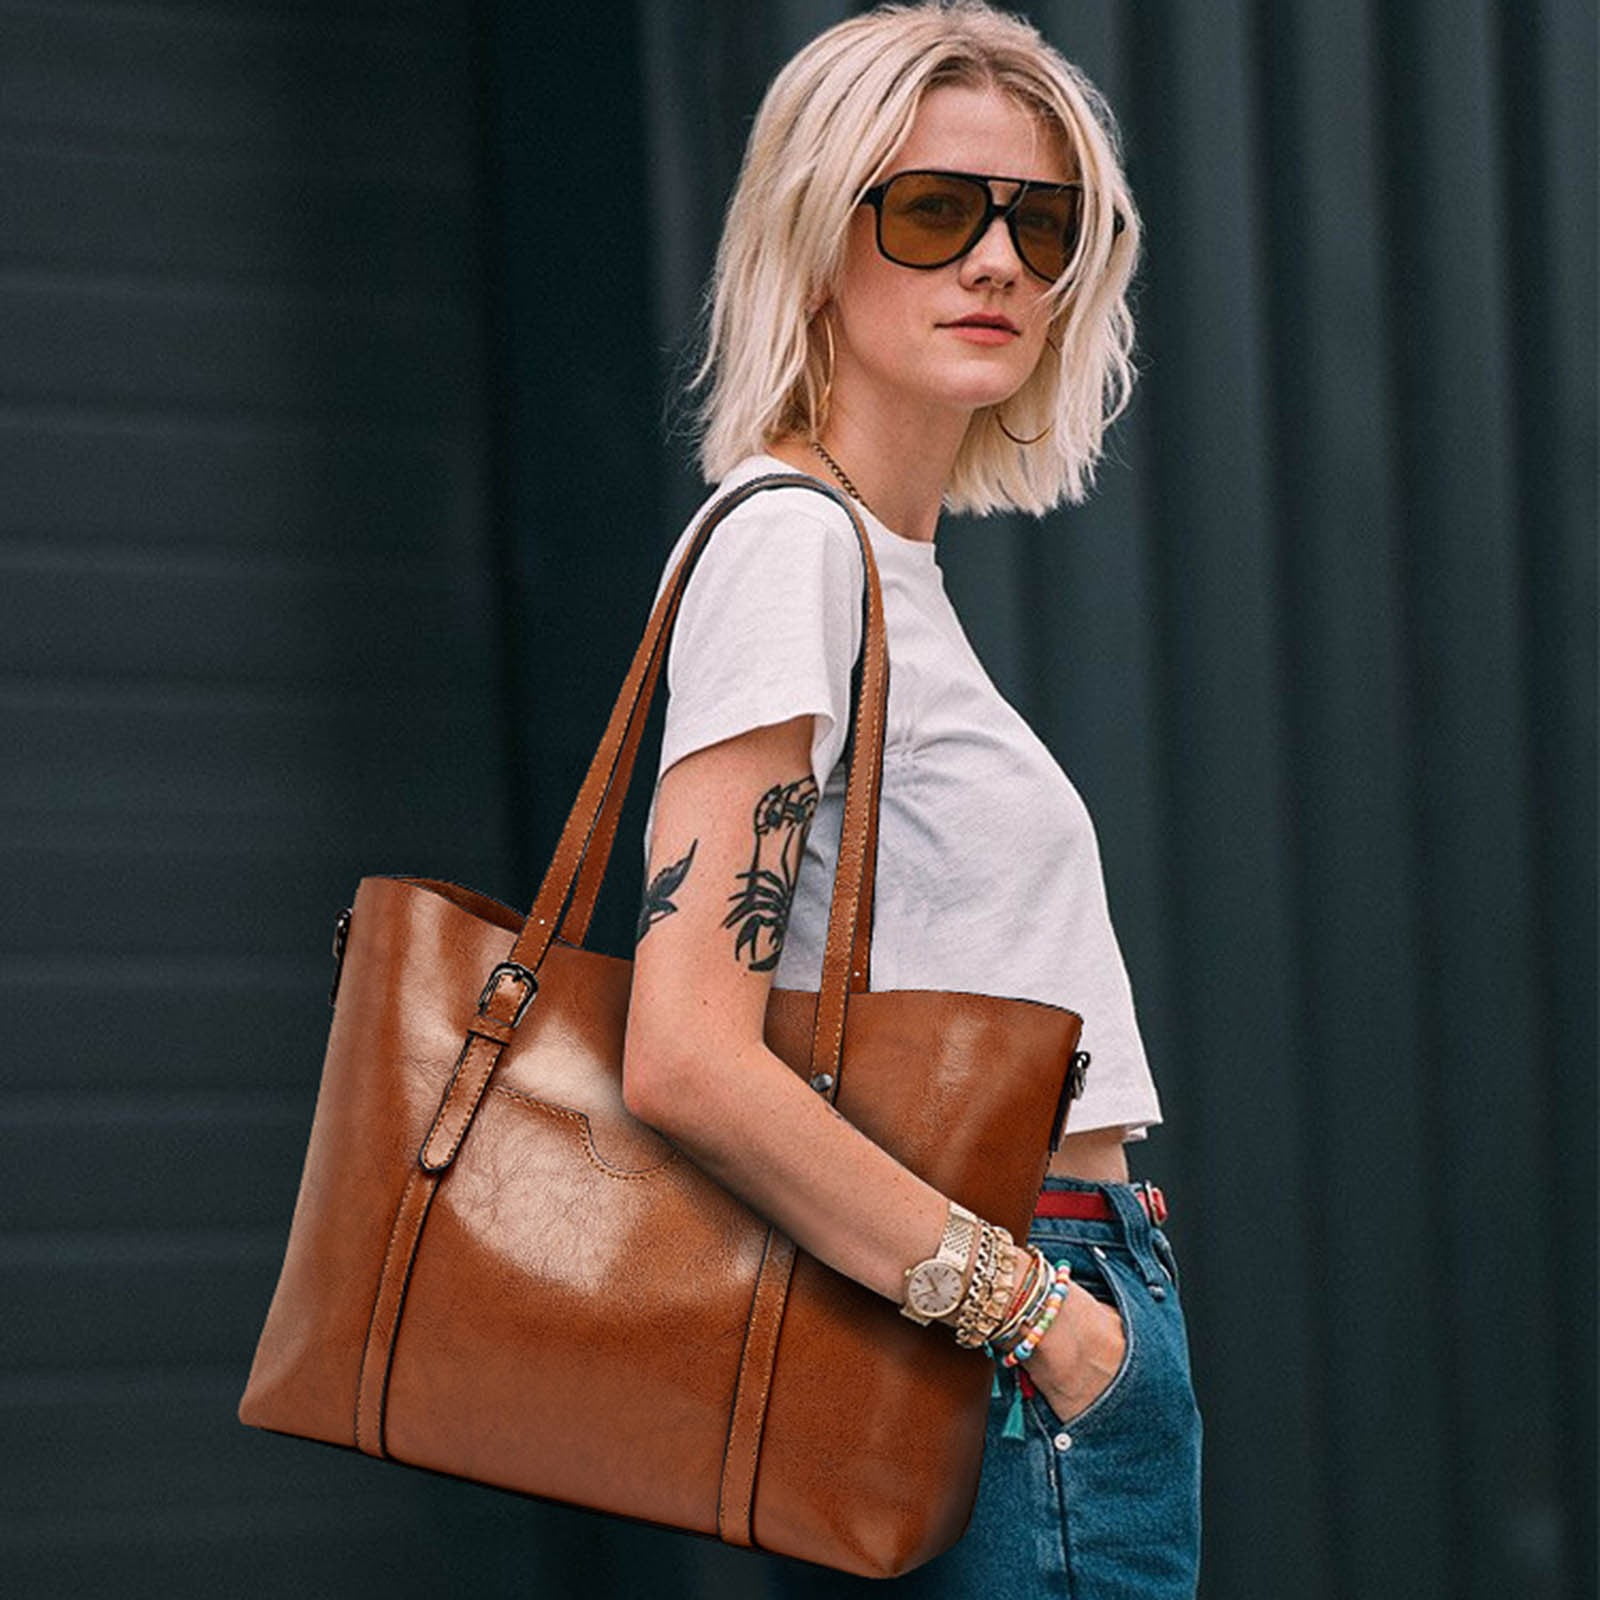 keusn handbags for womens large designer ladies bag pocket purse leather